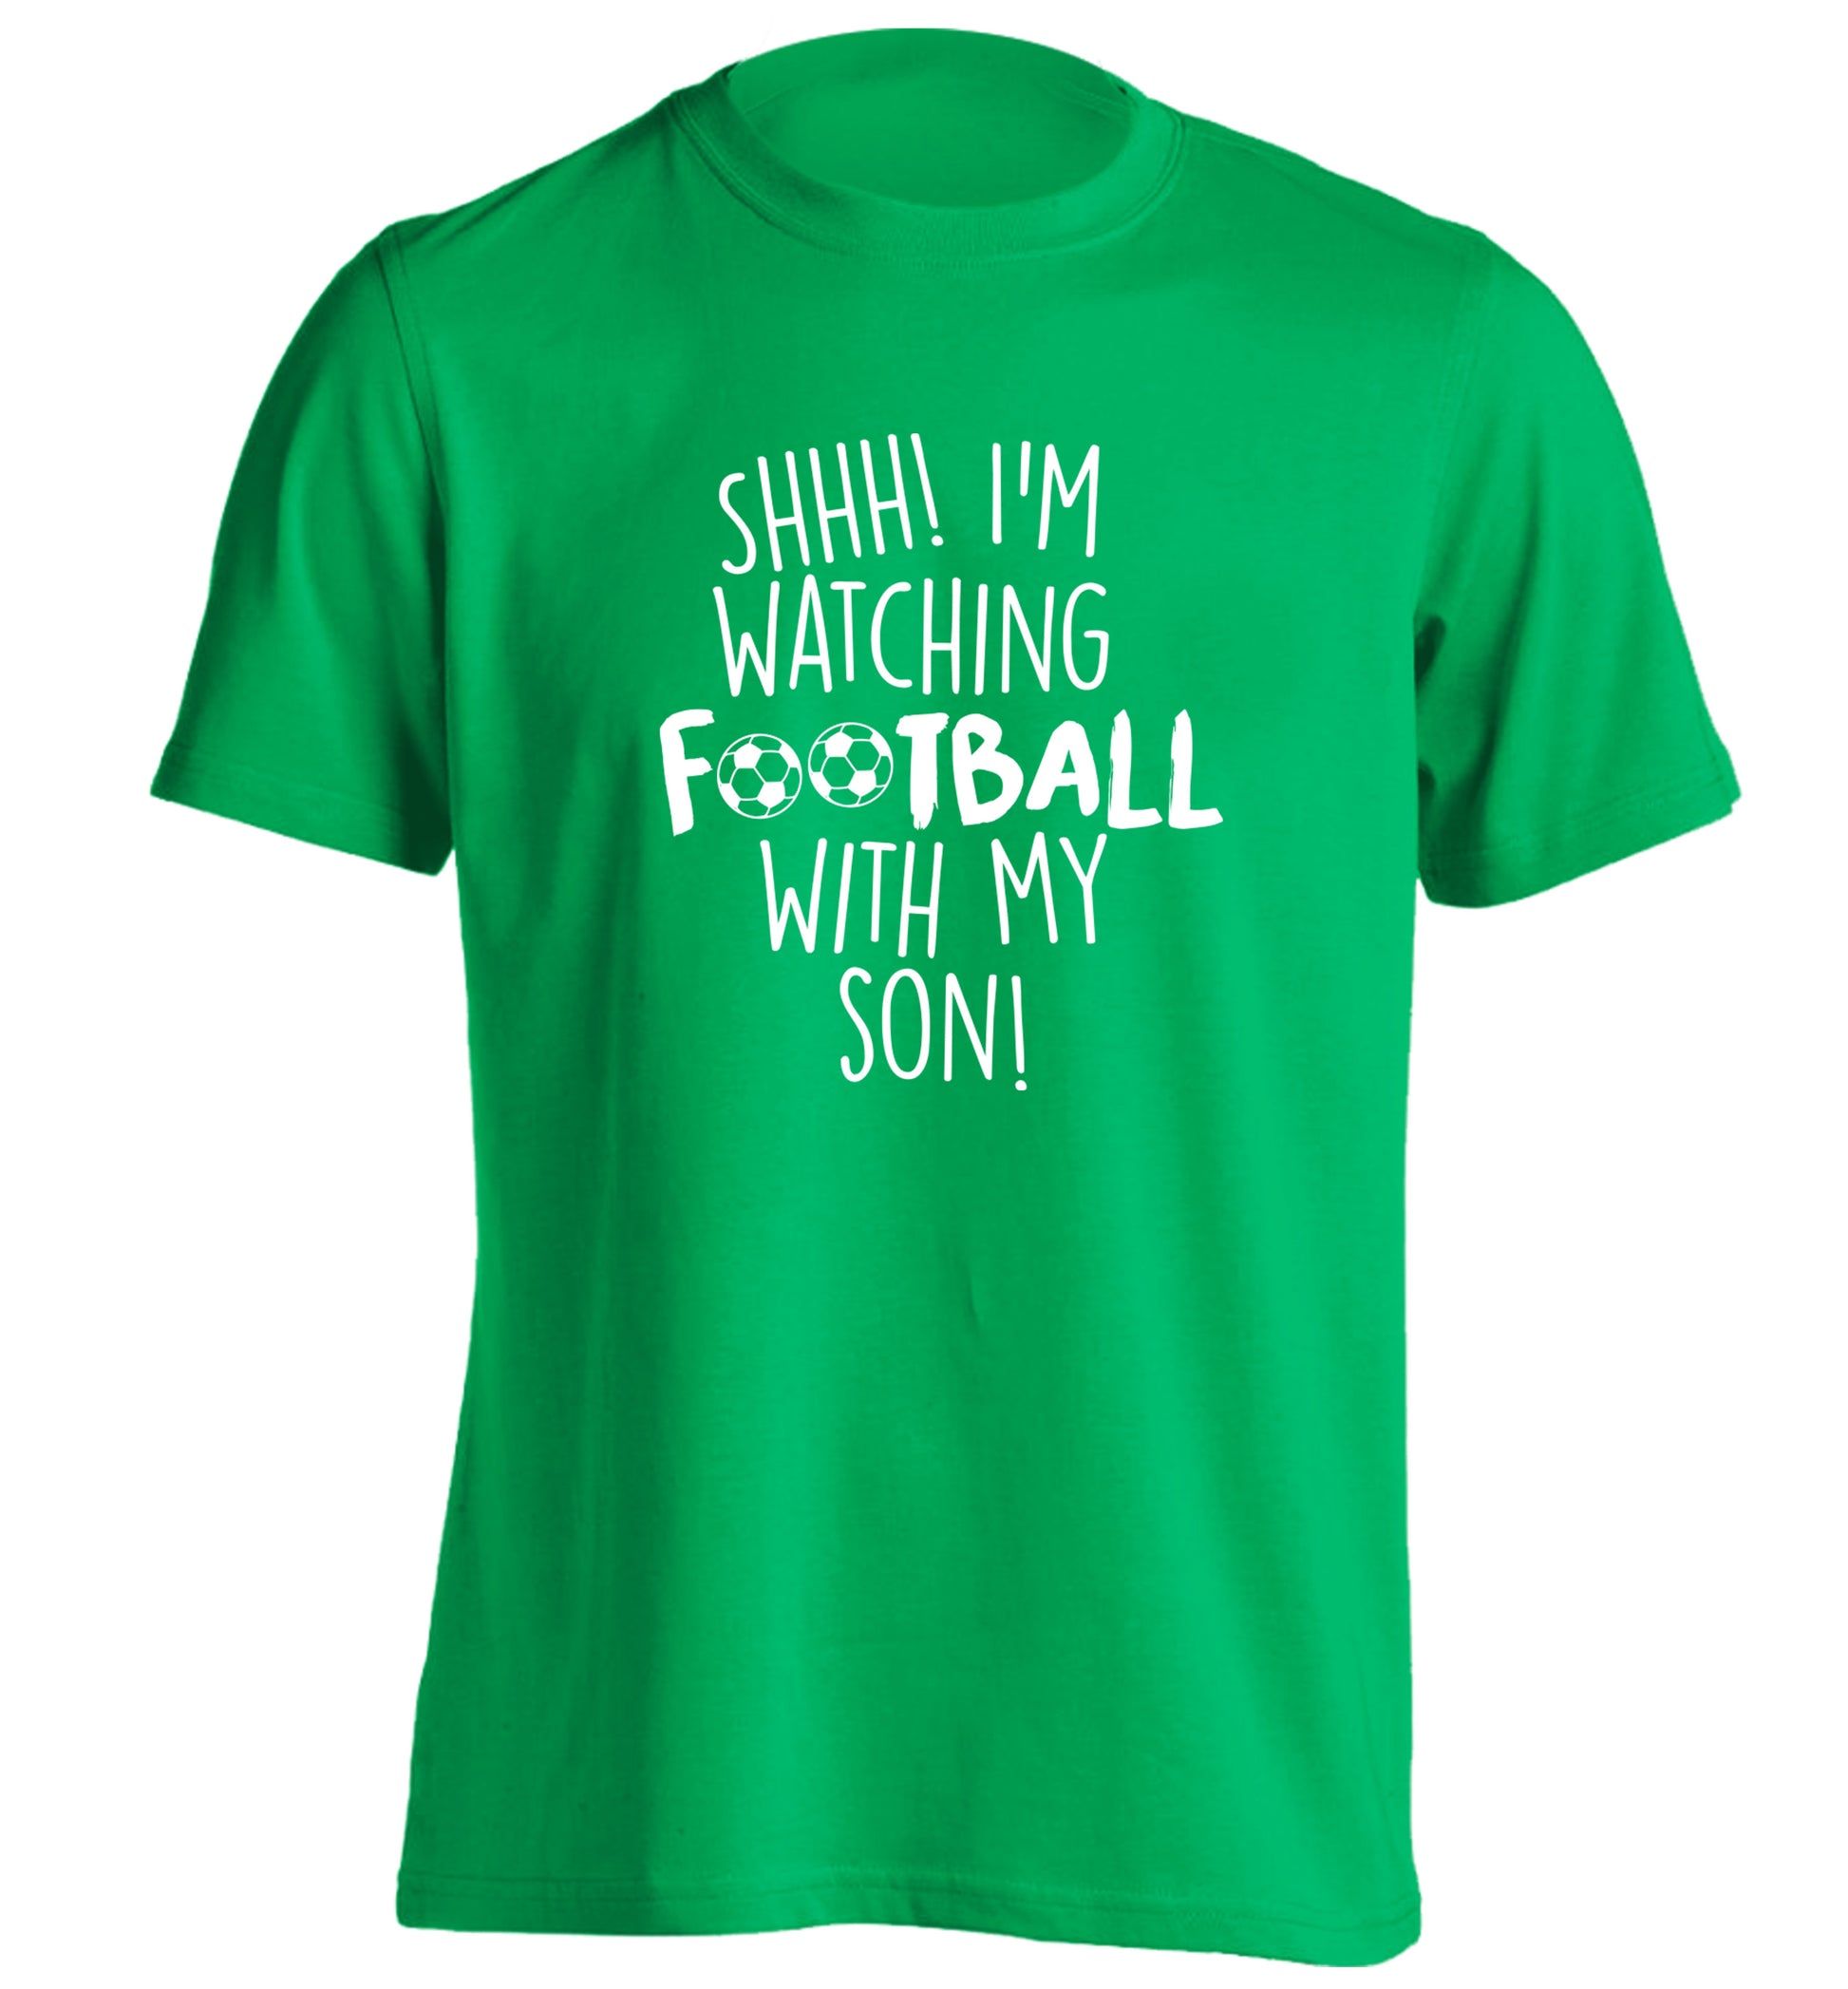 Shhh I'm watching football with my son adults unisexgreen Tshirt 2XL